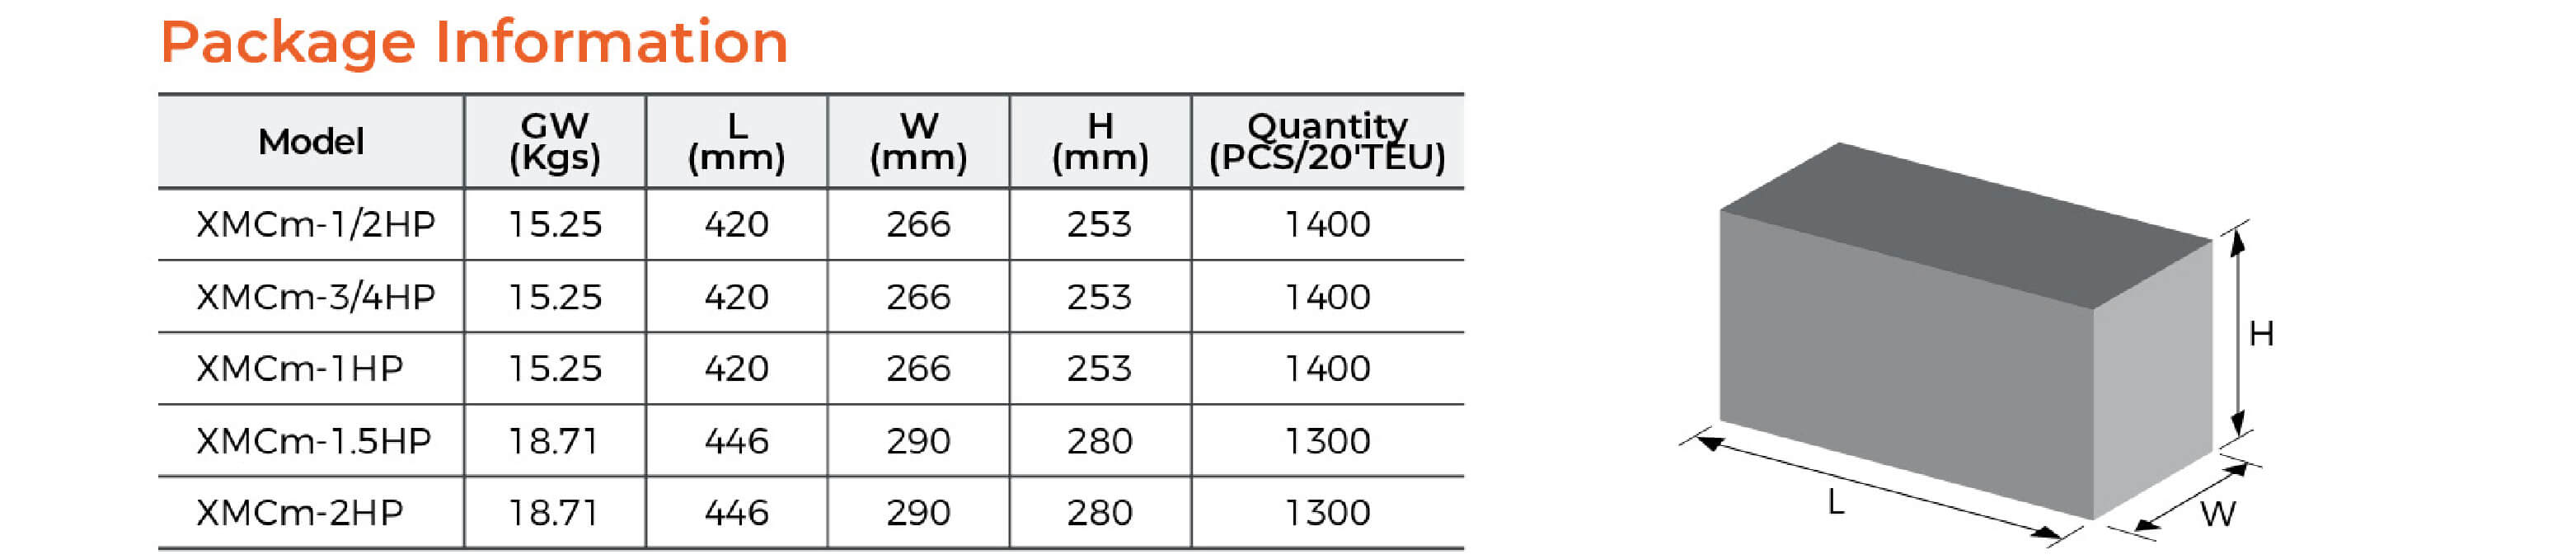 60HZ XMCm Centrifugal Pump Package Information